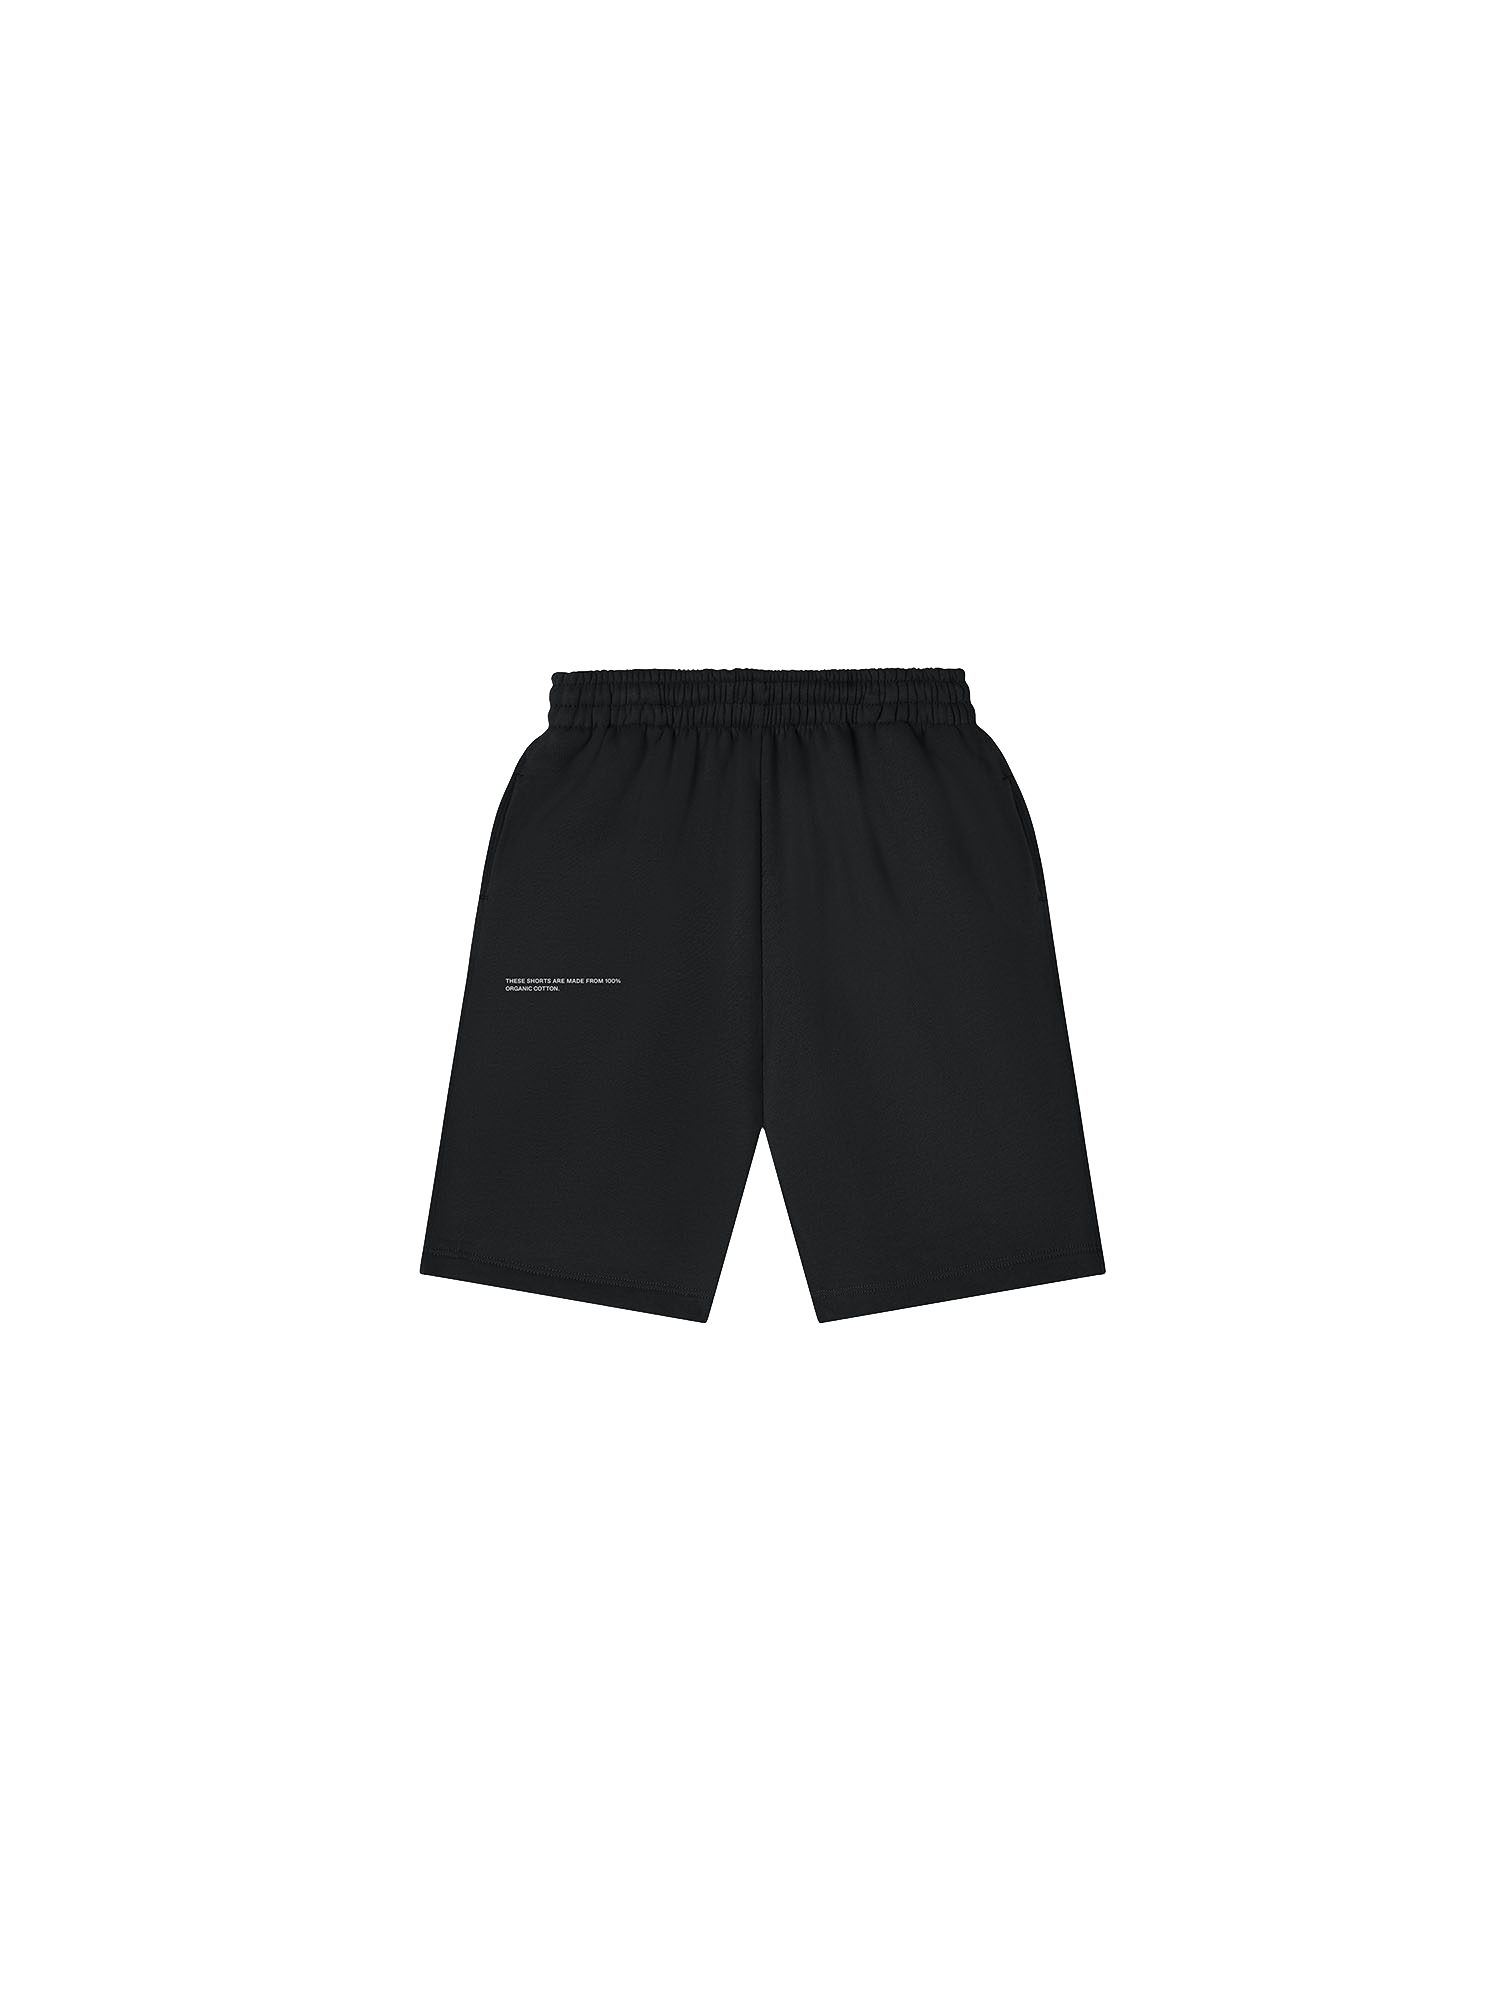 Kids 365 Long Shorts Core—black packshot-3